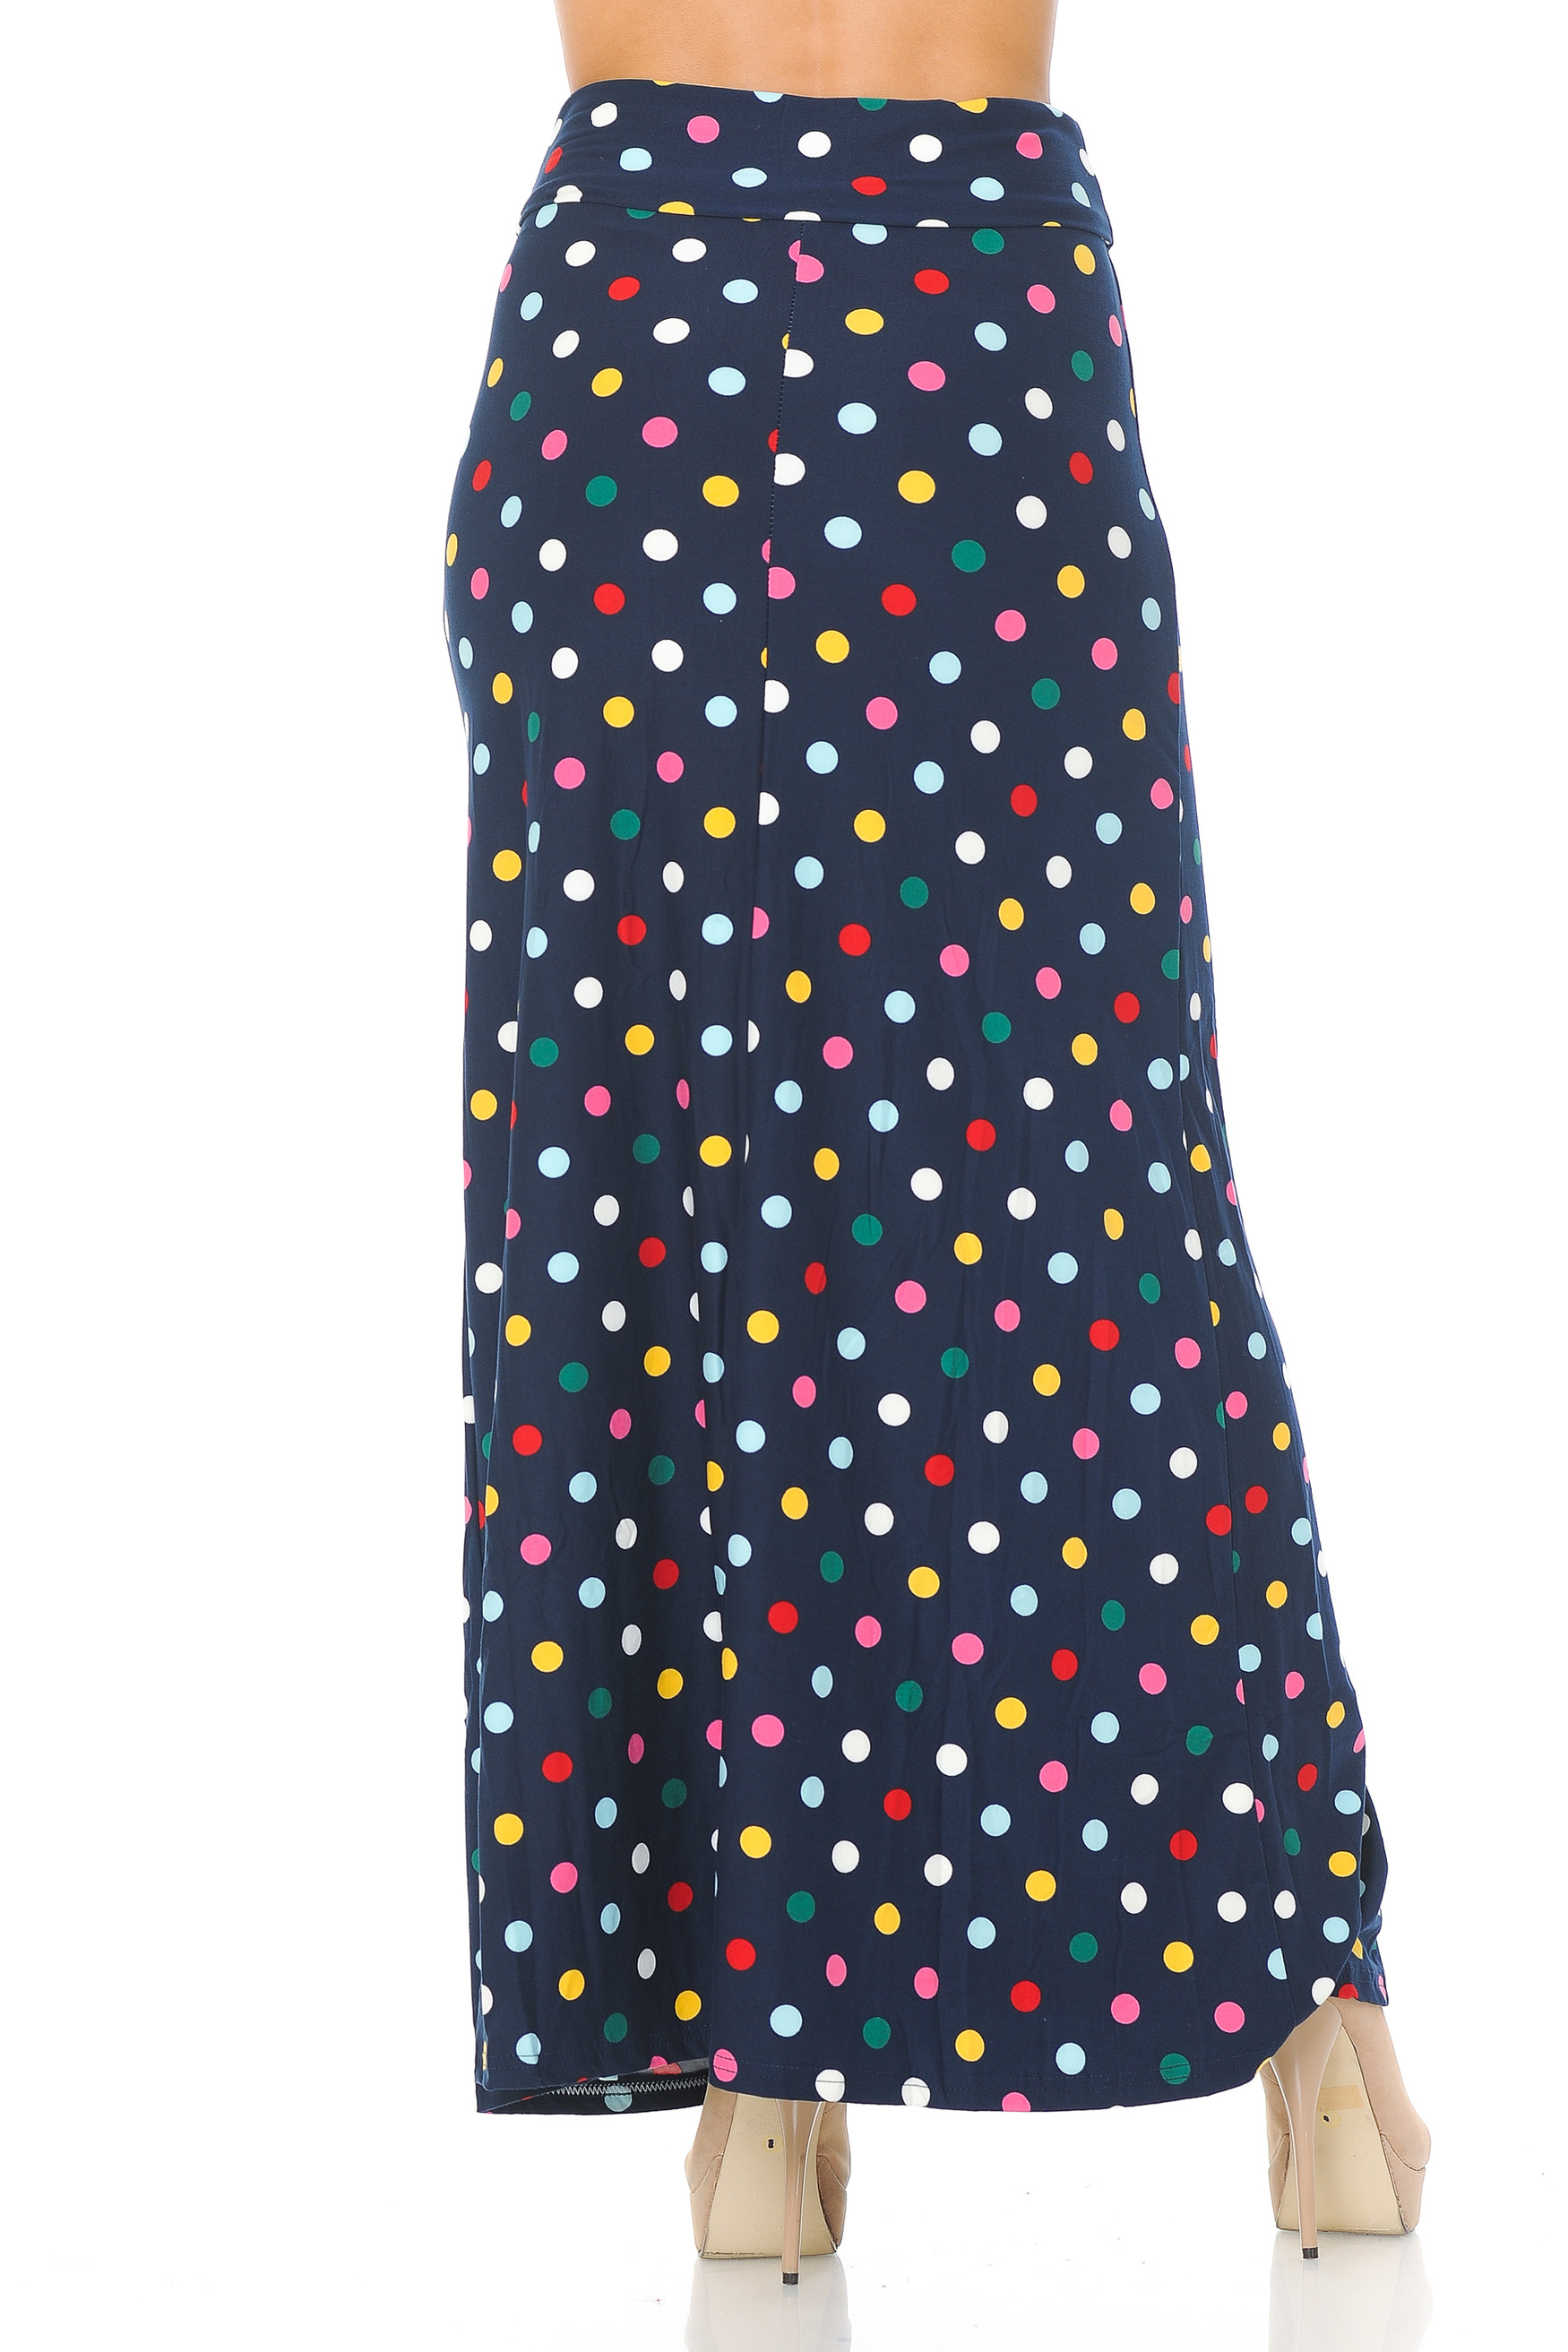 Brushed Colorful Polka Dot Maxi Skirt